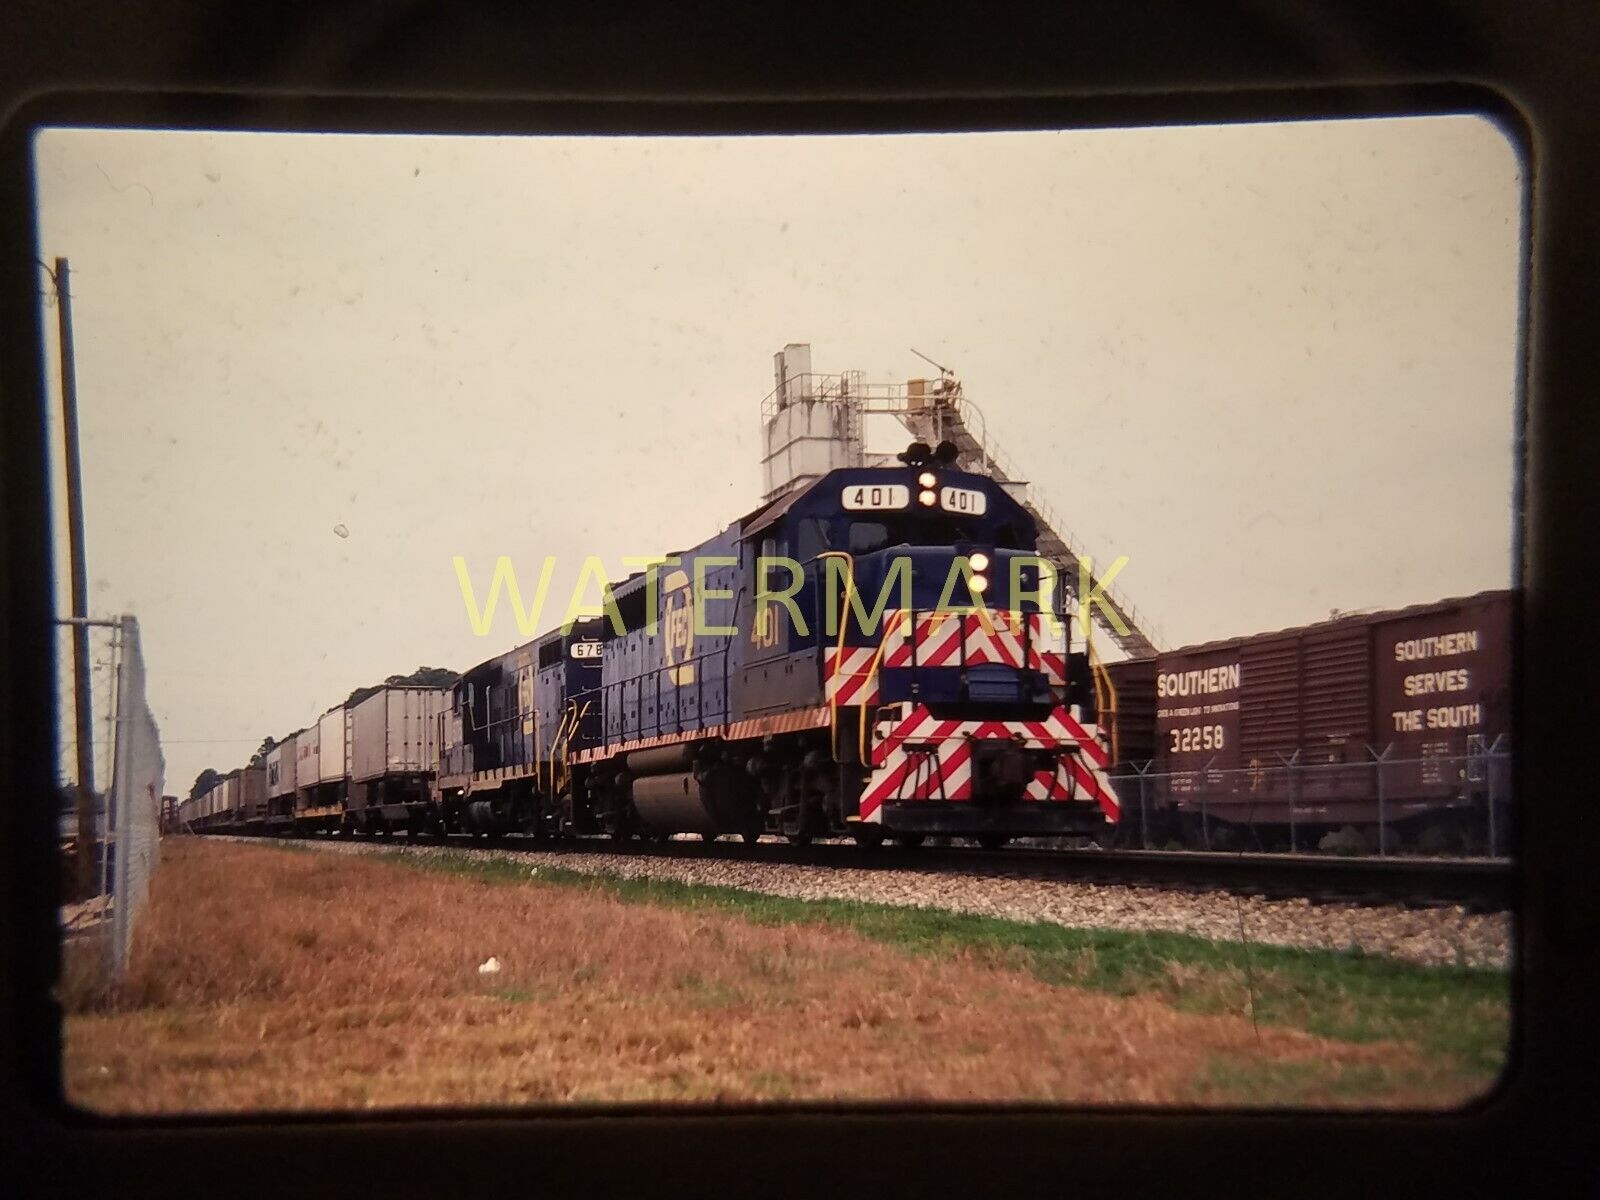 WG17 ORIGINAL TRAIN SLIDE Southern Serves the South 401 32258 GP-40 Florida 1979